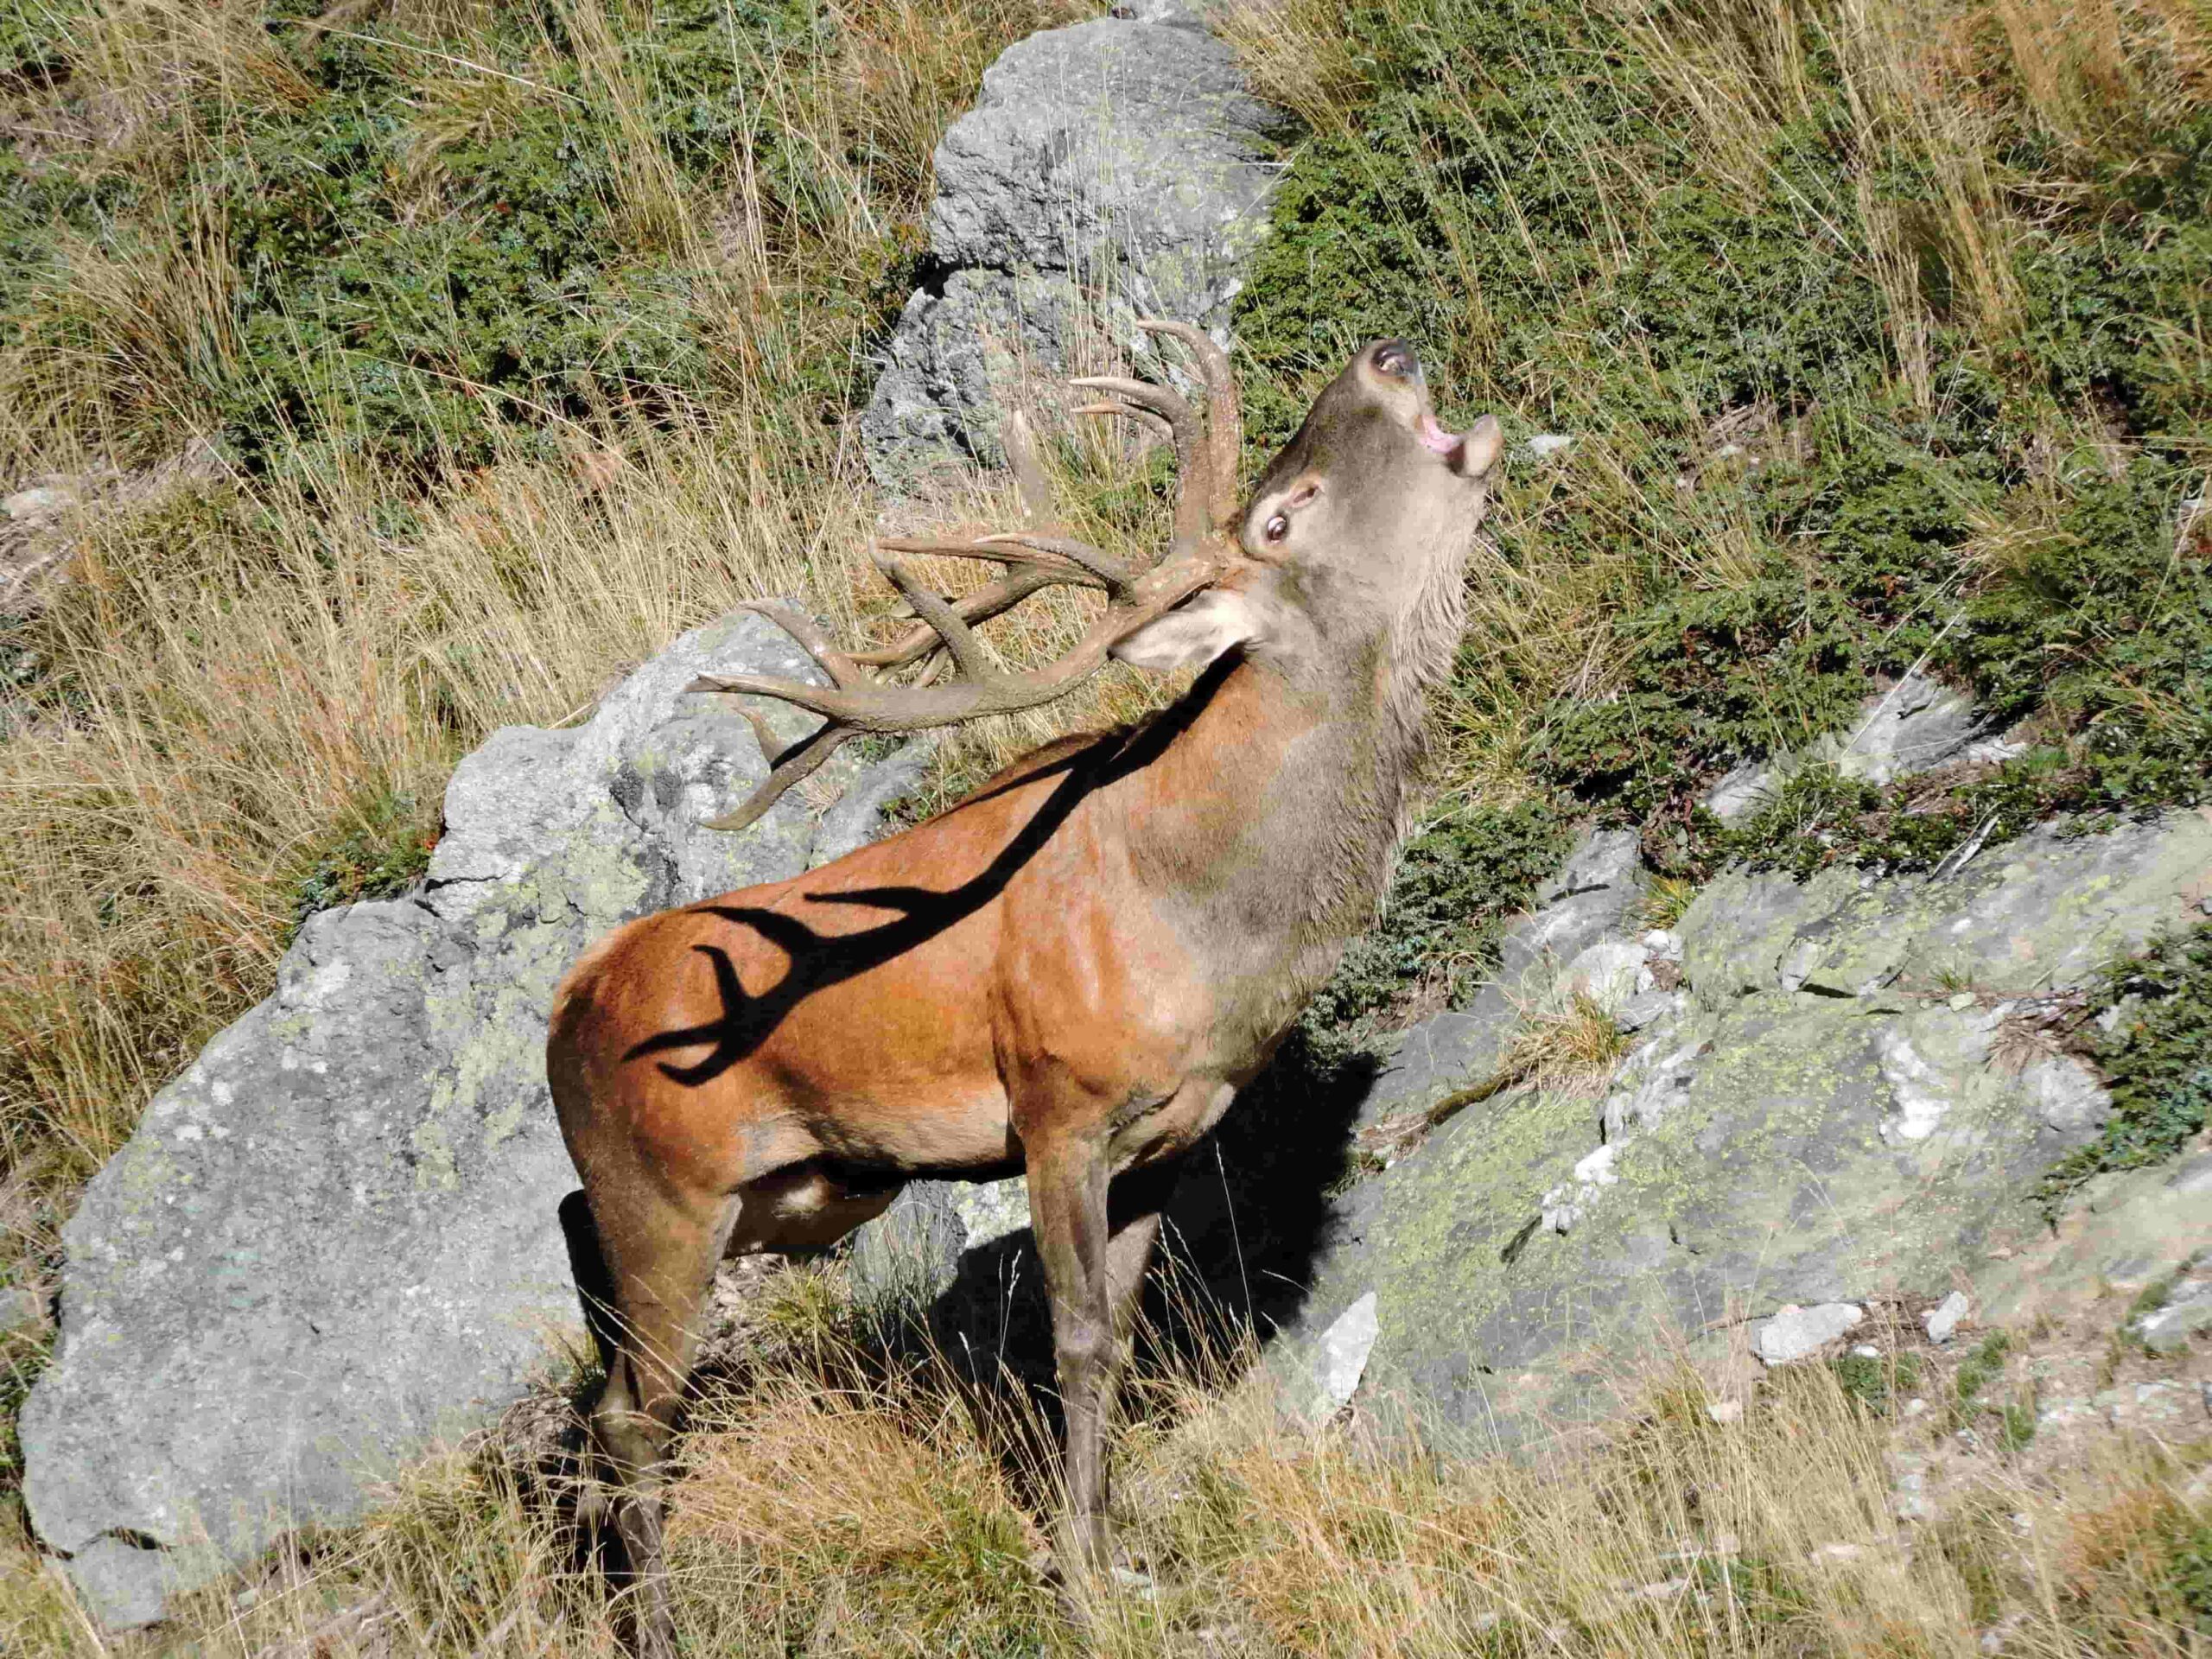 hunting, deer / roe deer / chamois, North American Indian hunting